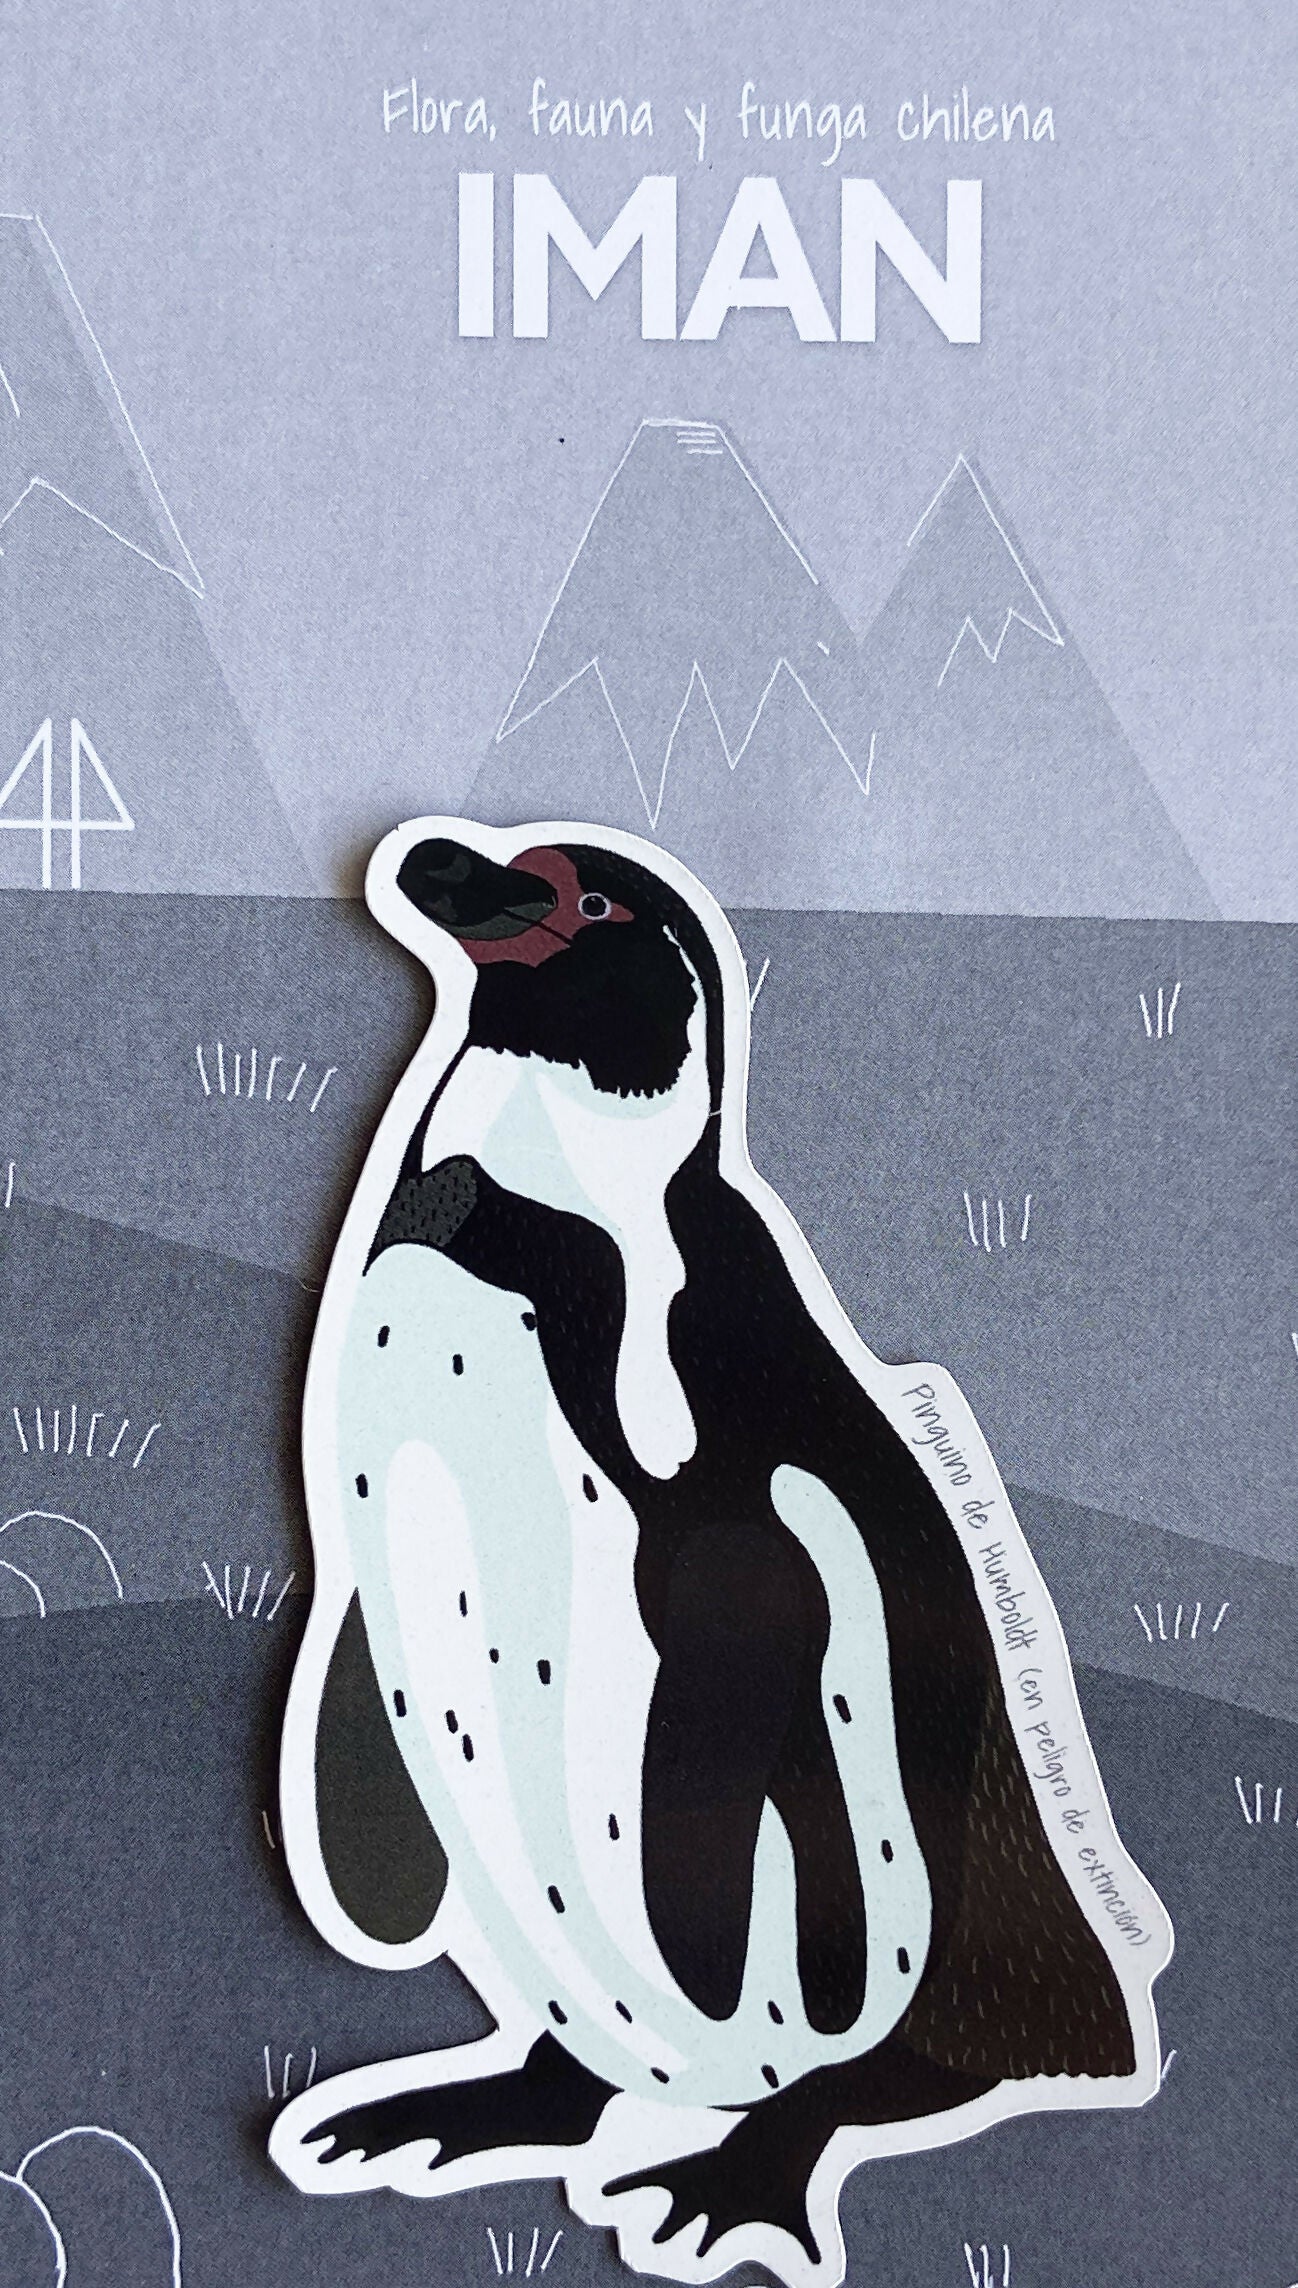 Iman Pinguino de Humboldt